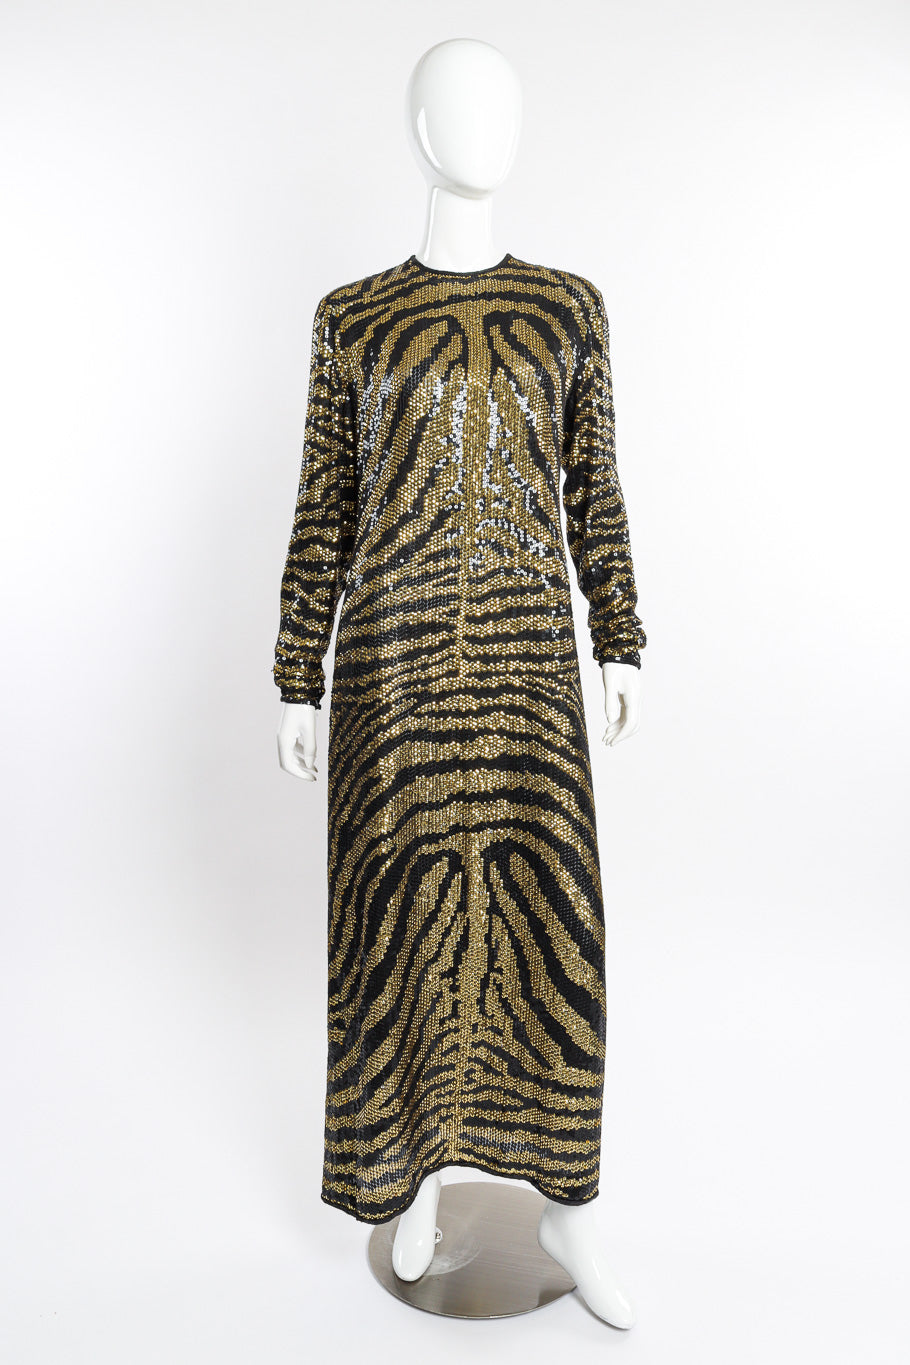 Vintage Halston Tiger Sequin Sheath Gown front on mannequin @recessla